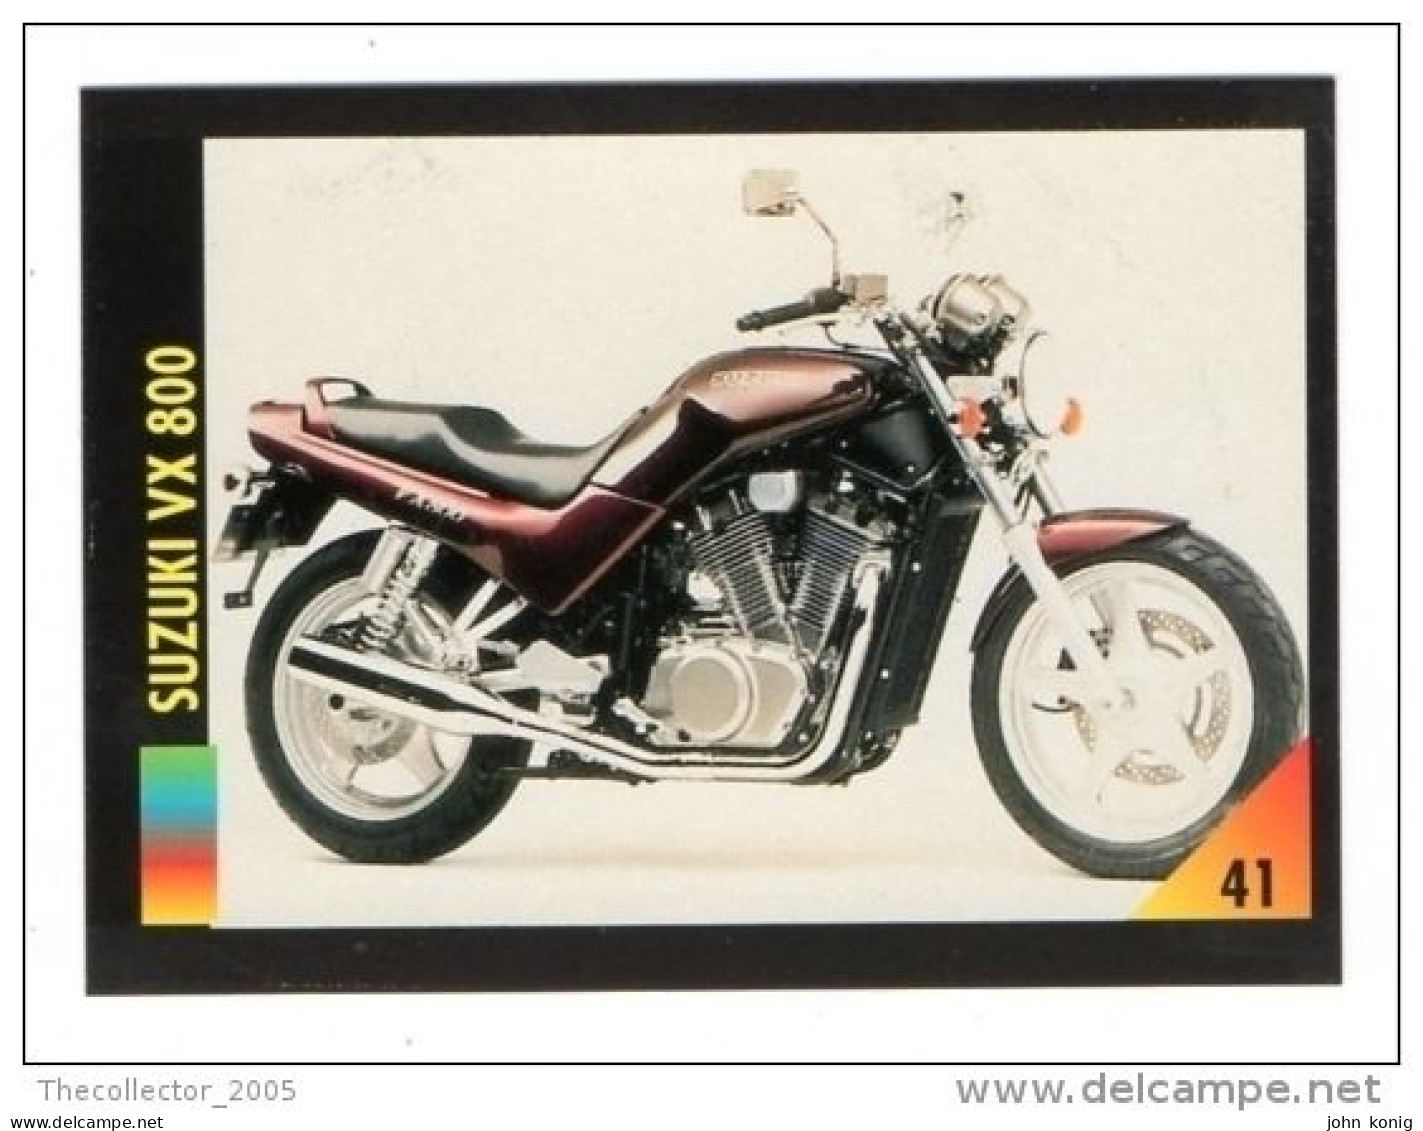 FIGURINA TRADING CARDS - LA MIA MOTO - MY MOTORBIKE - MASTERS EDIZIONI (1993) - SUZUKI VX 800 - Moteurs